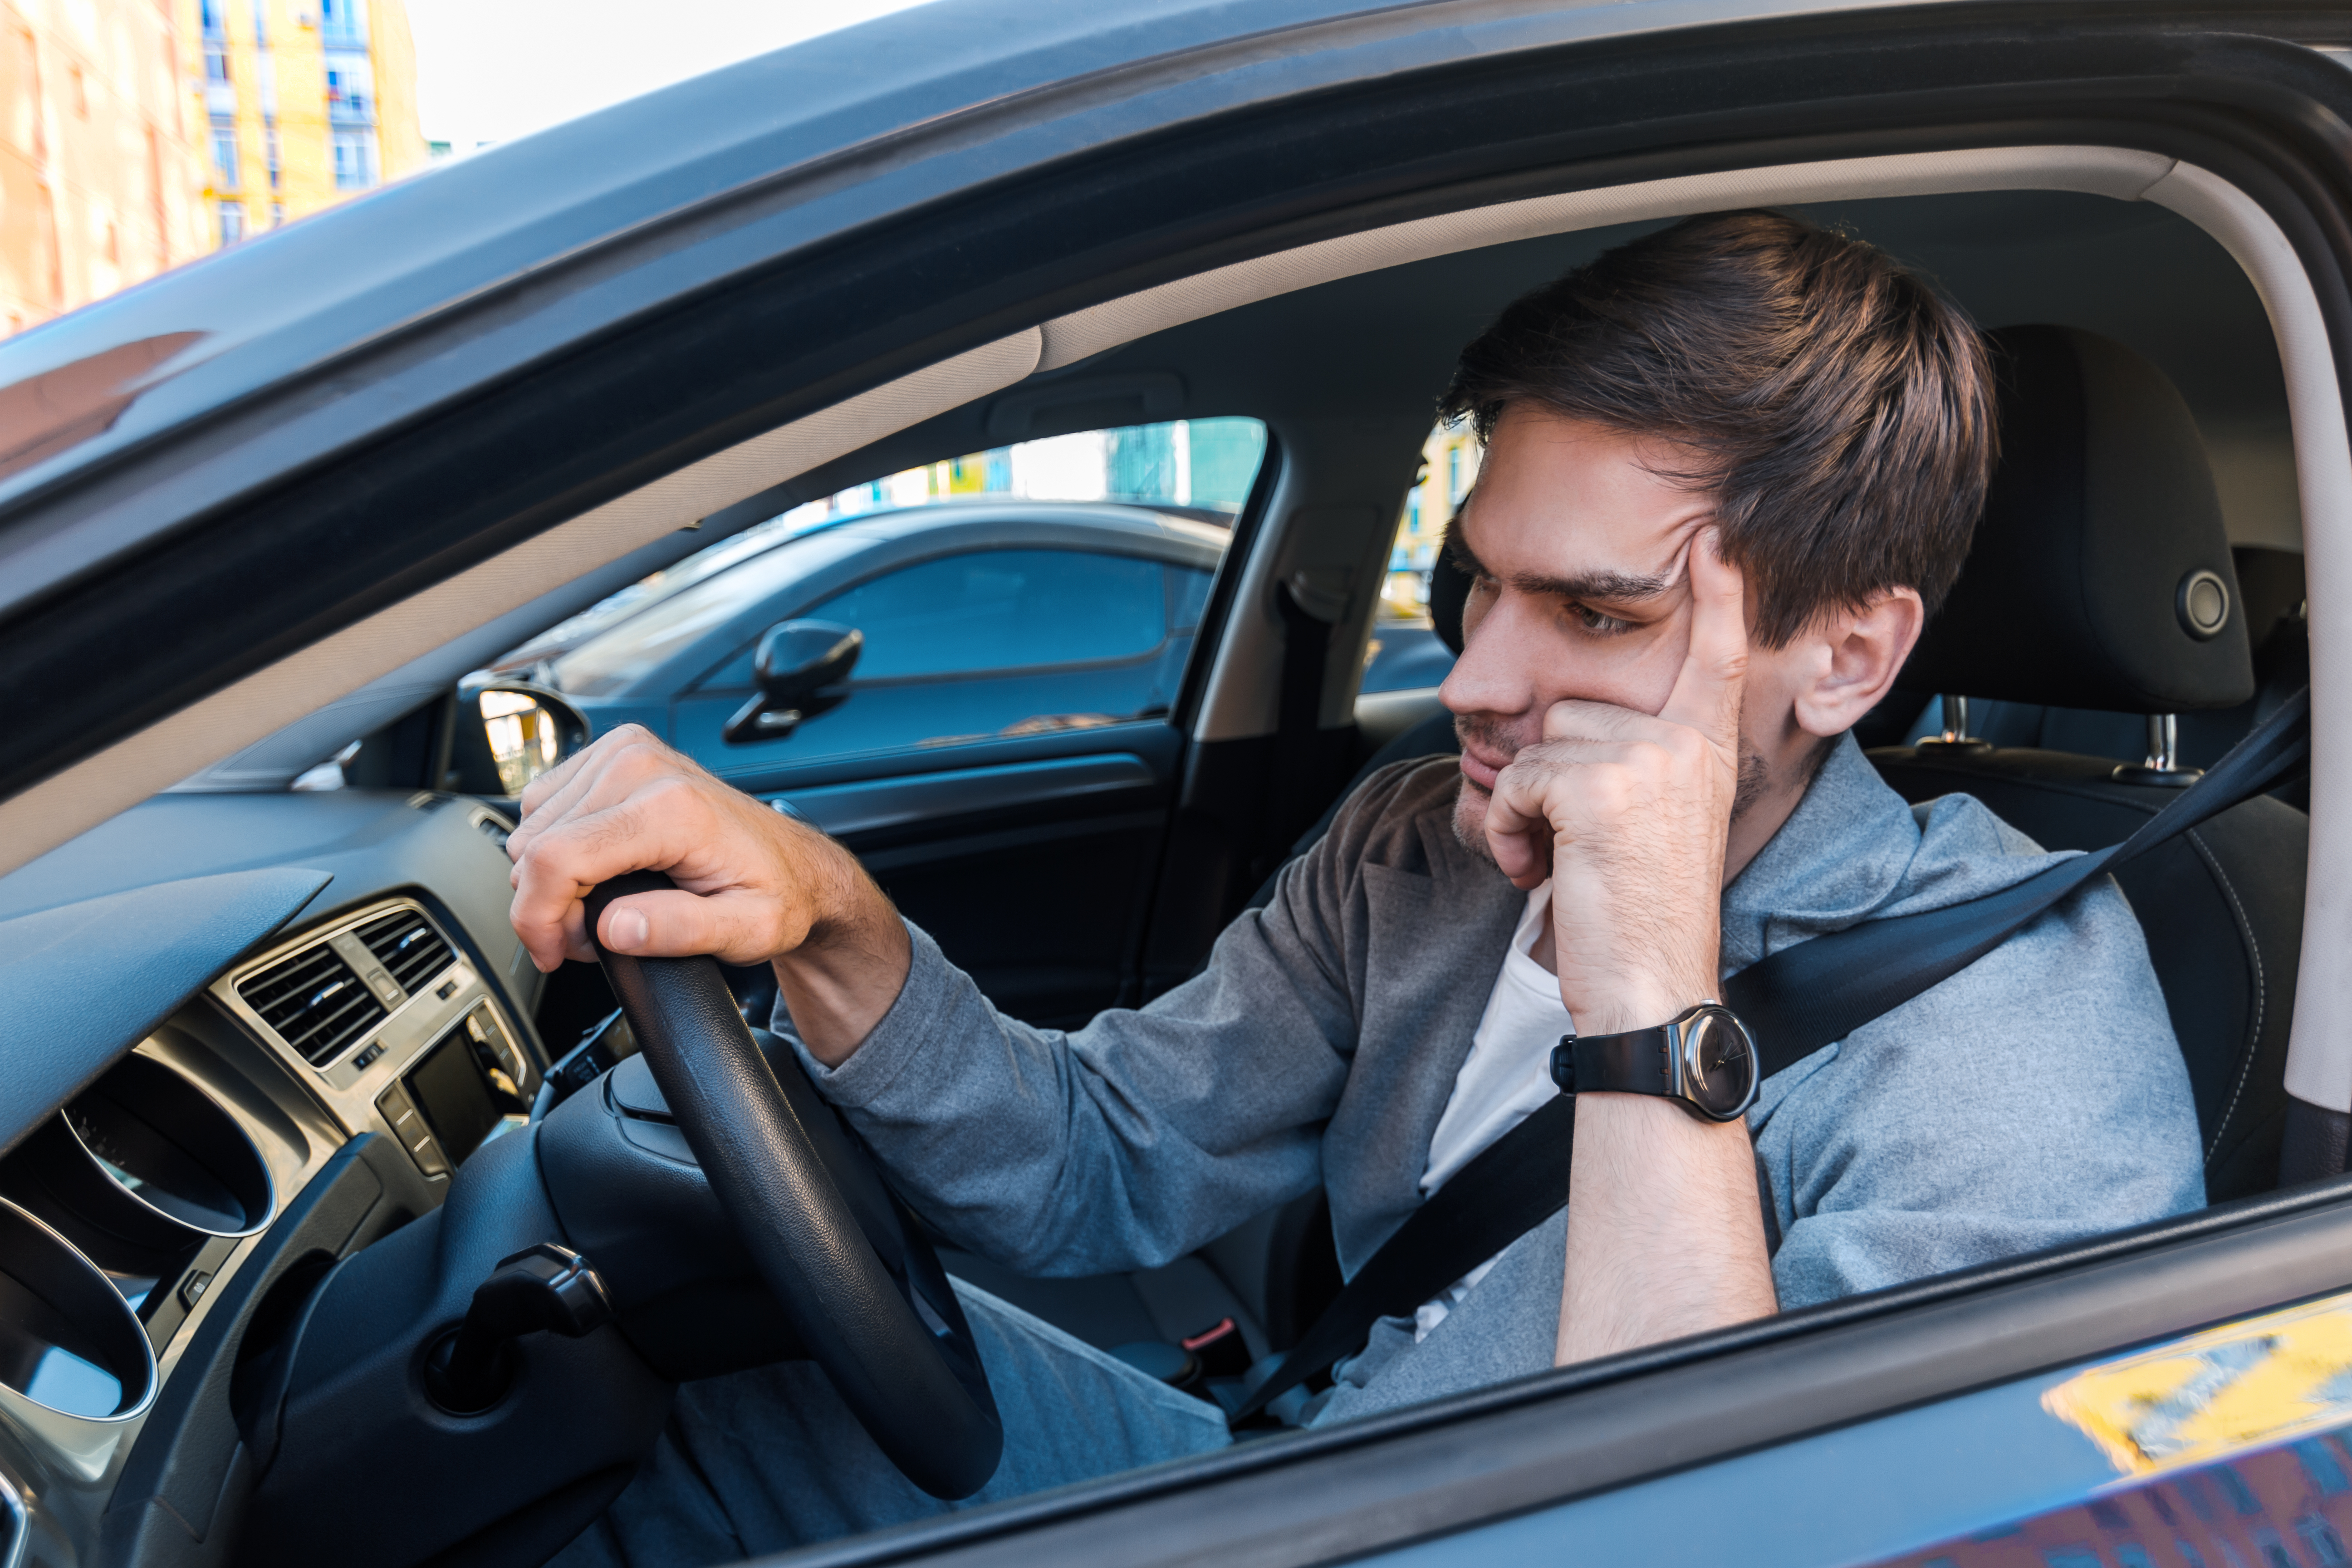 A driver stuck in traffic. | Source: Shutterstock